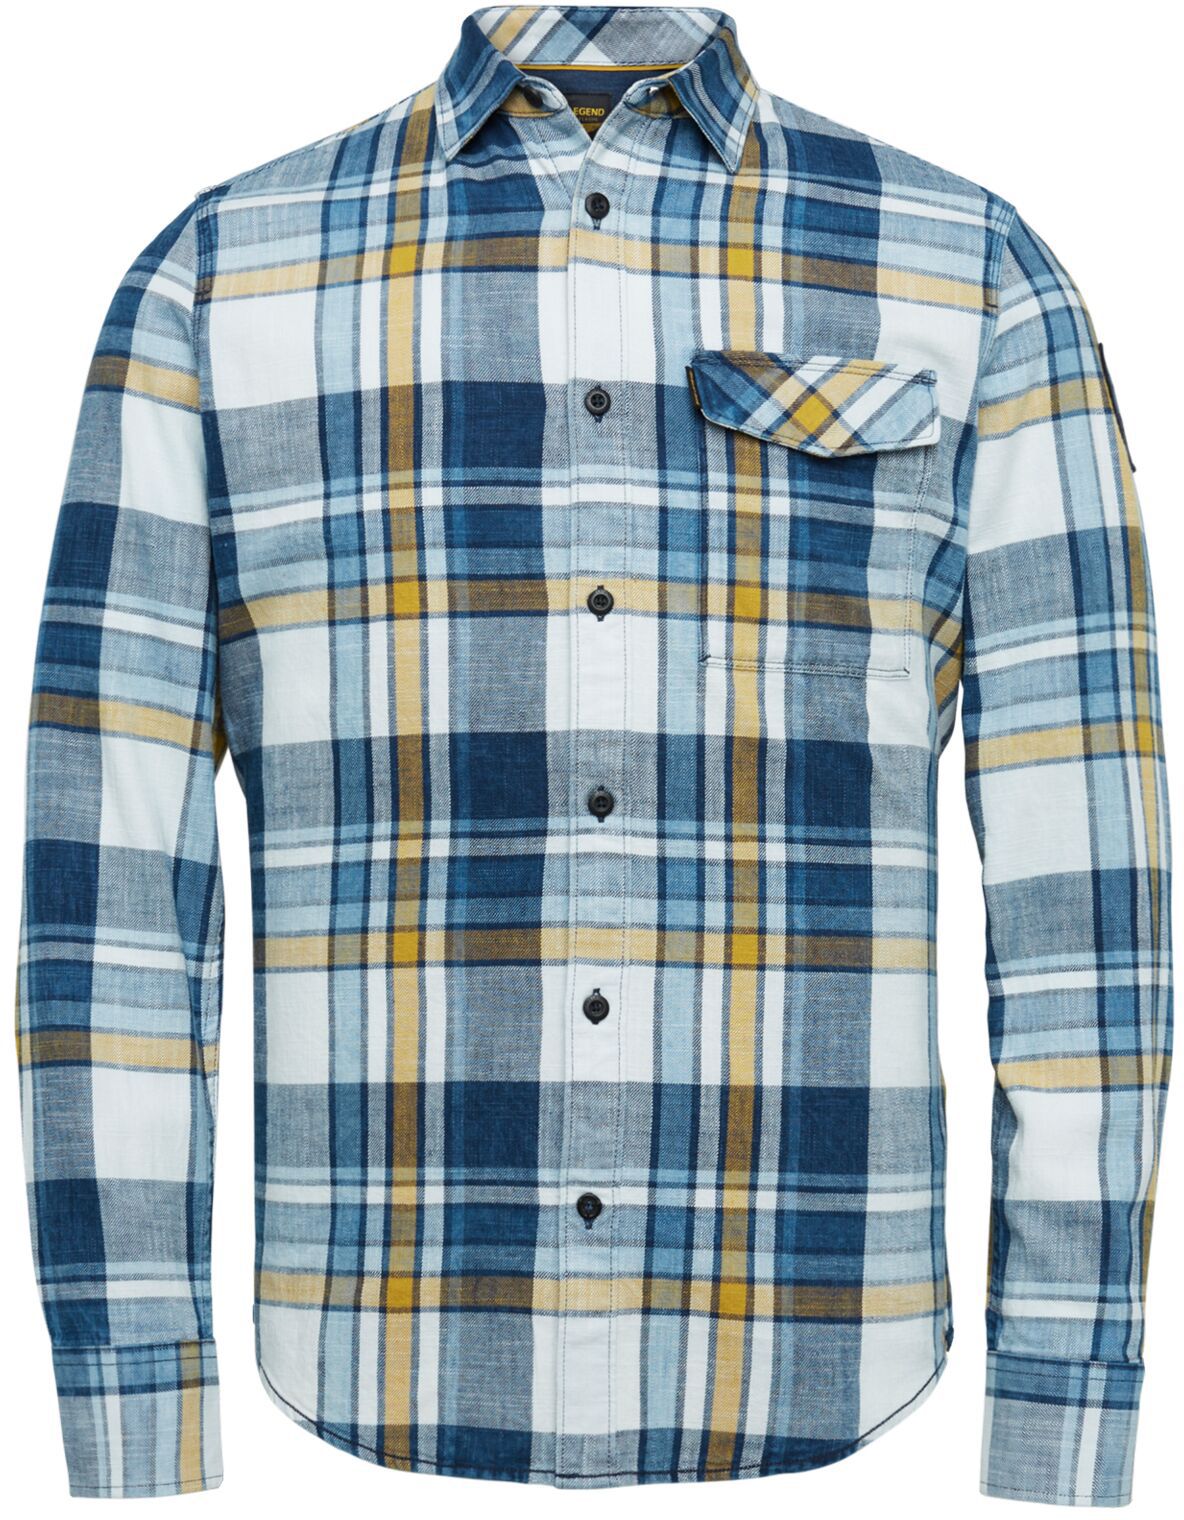 PME Legend Shirt Checkered Yellow Multicolour Blue size 3XL